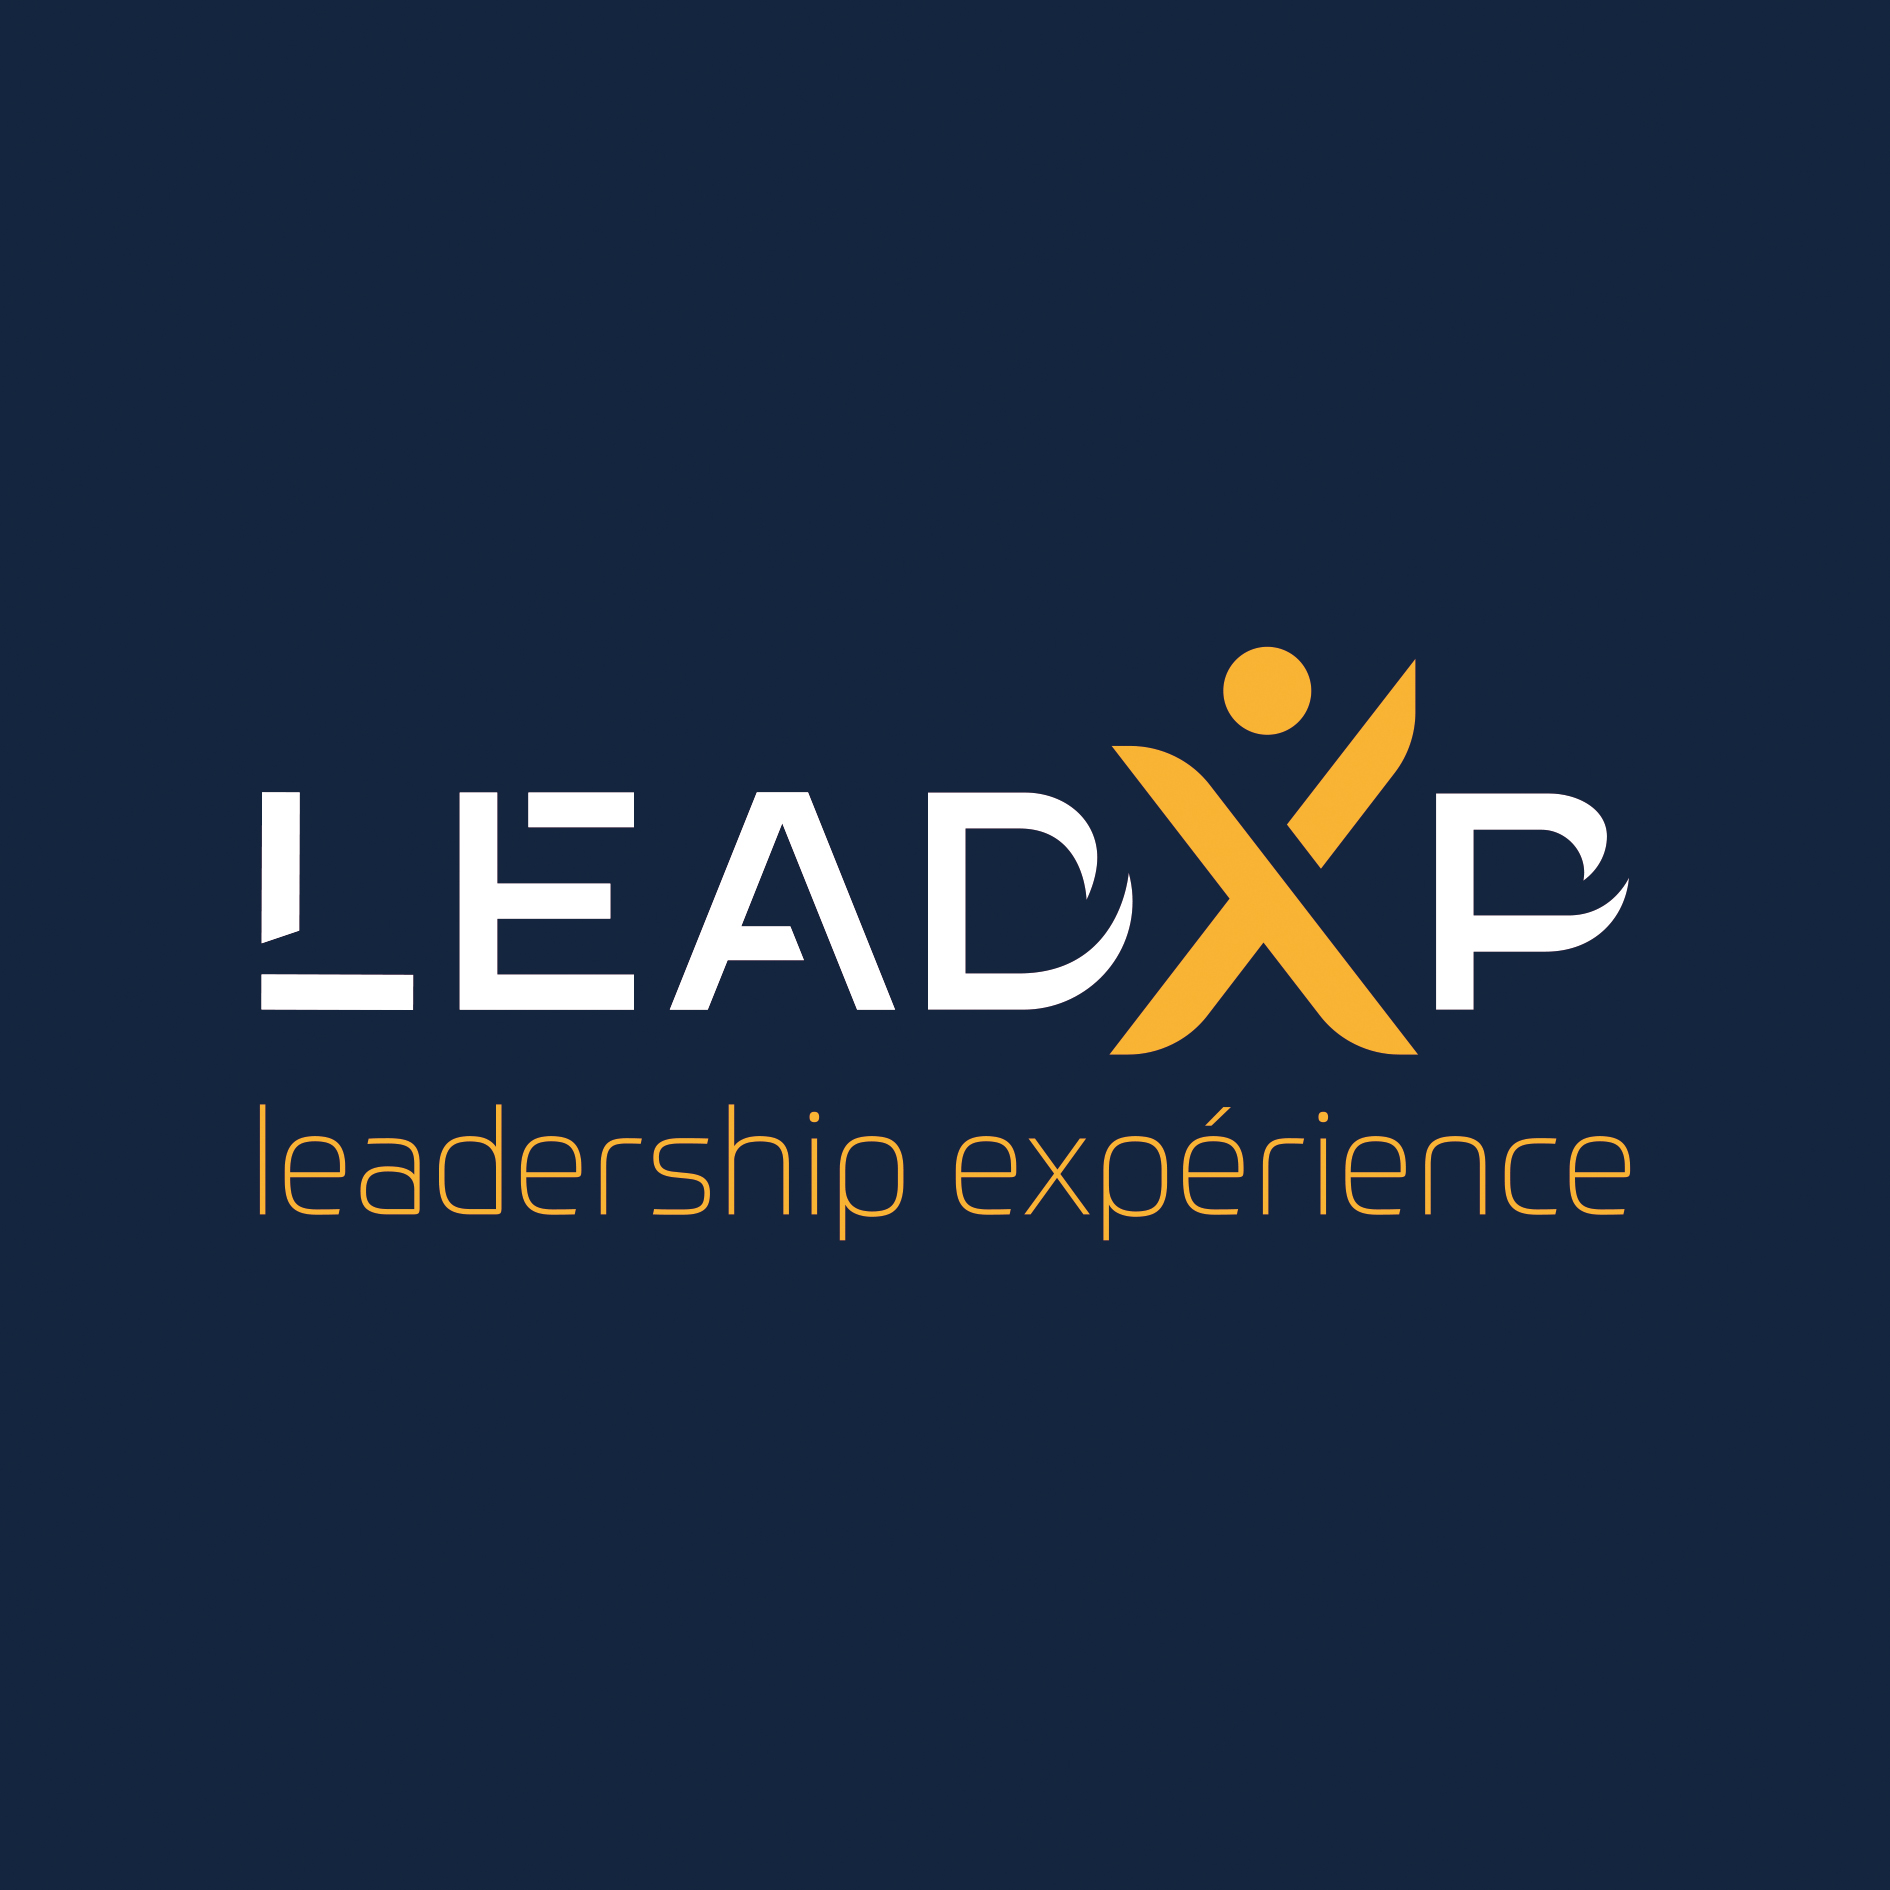 Leadership expérience - LeadXP